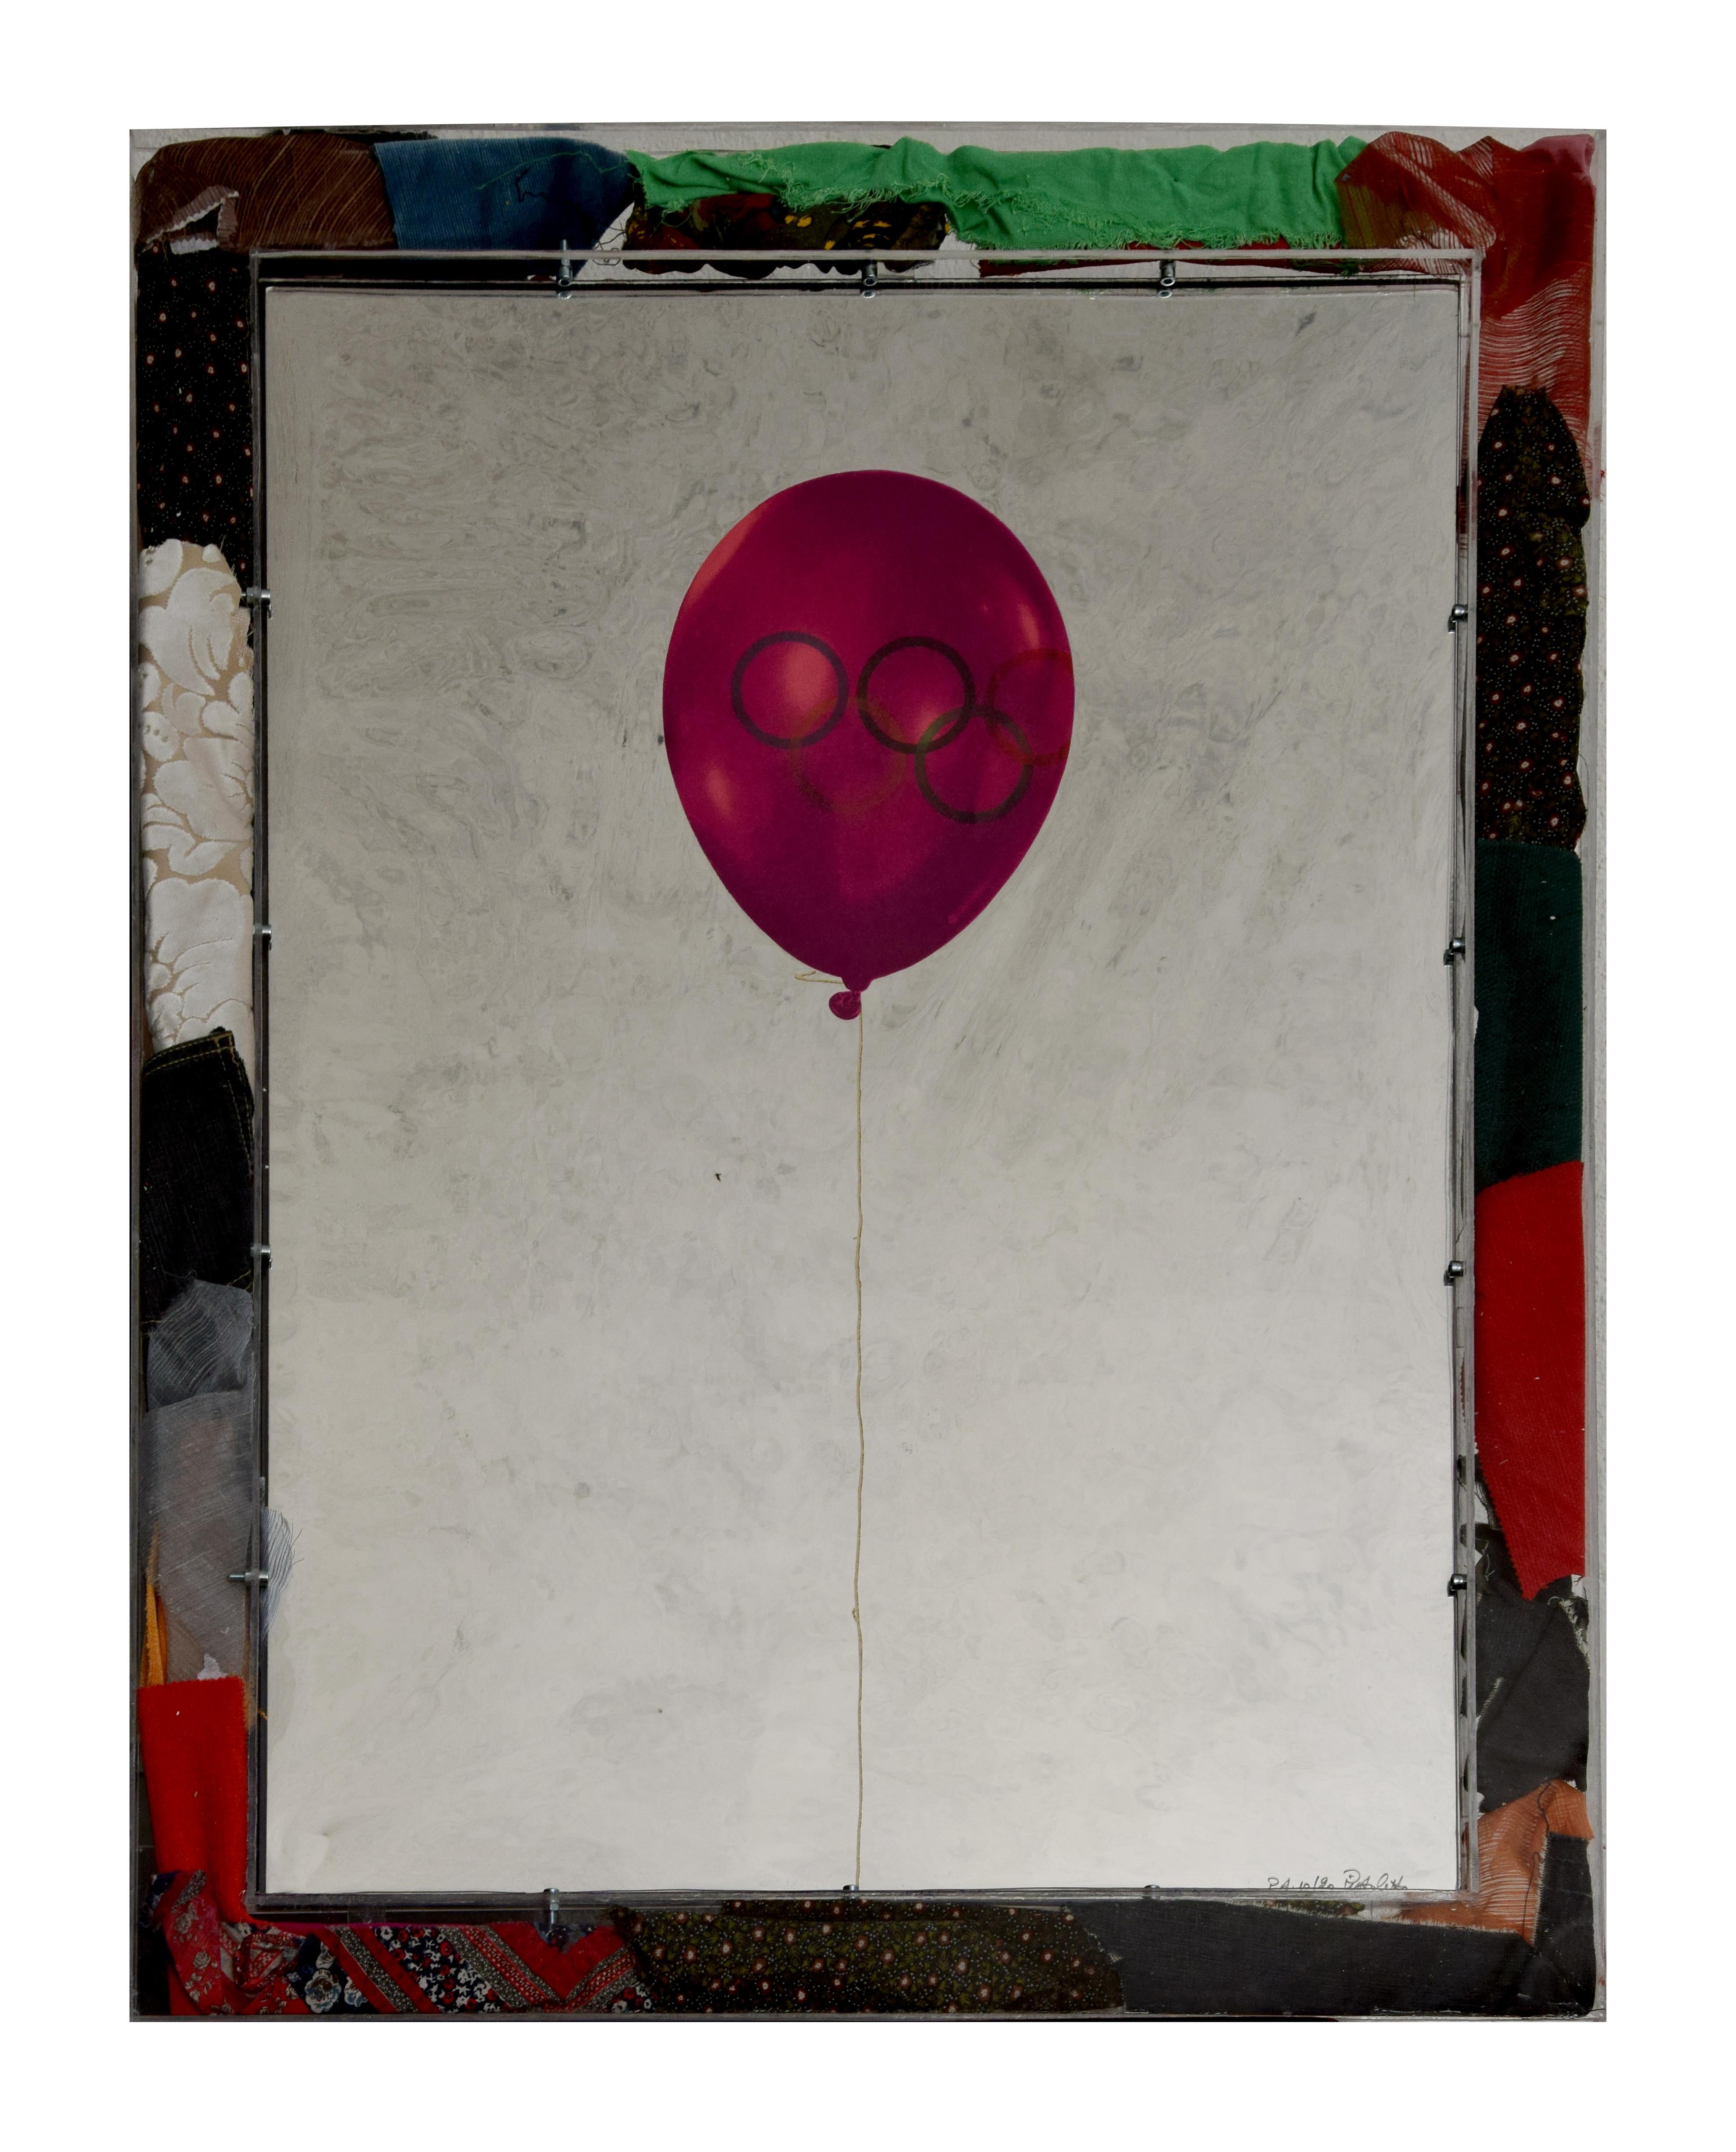 Michelangelo Pistoletto Figurative Print - Olympic Balloons – Screen Print on Aluminium by M. Pistoletto - 1984 